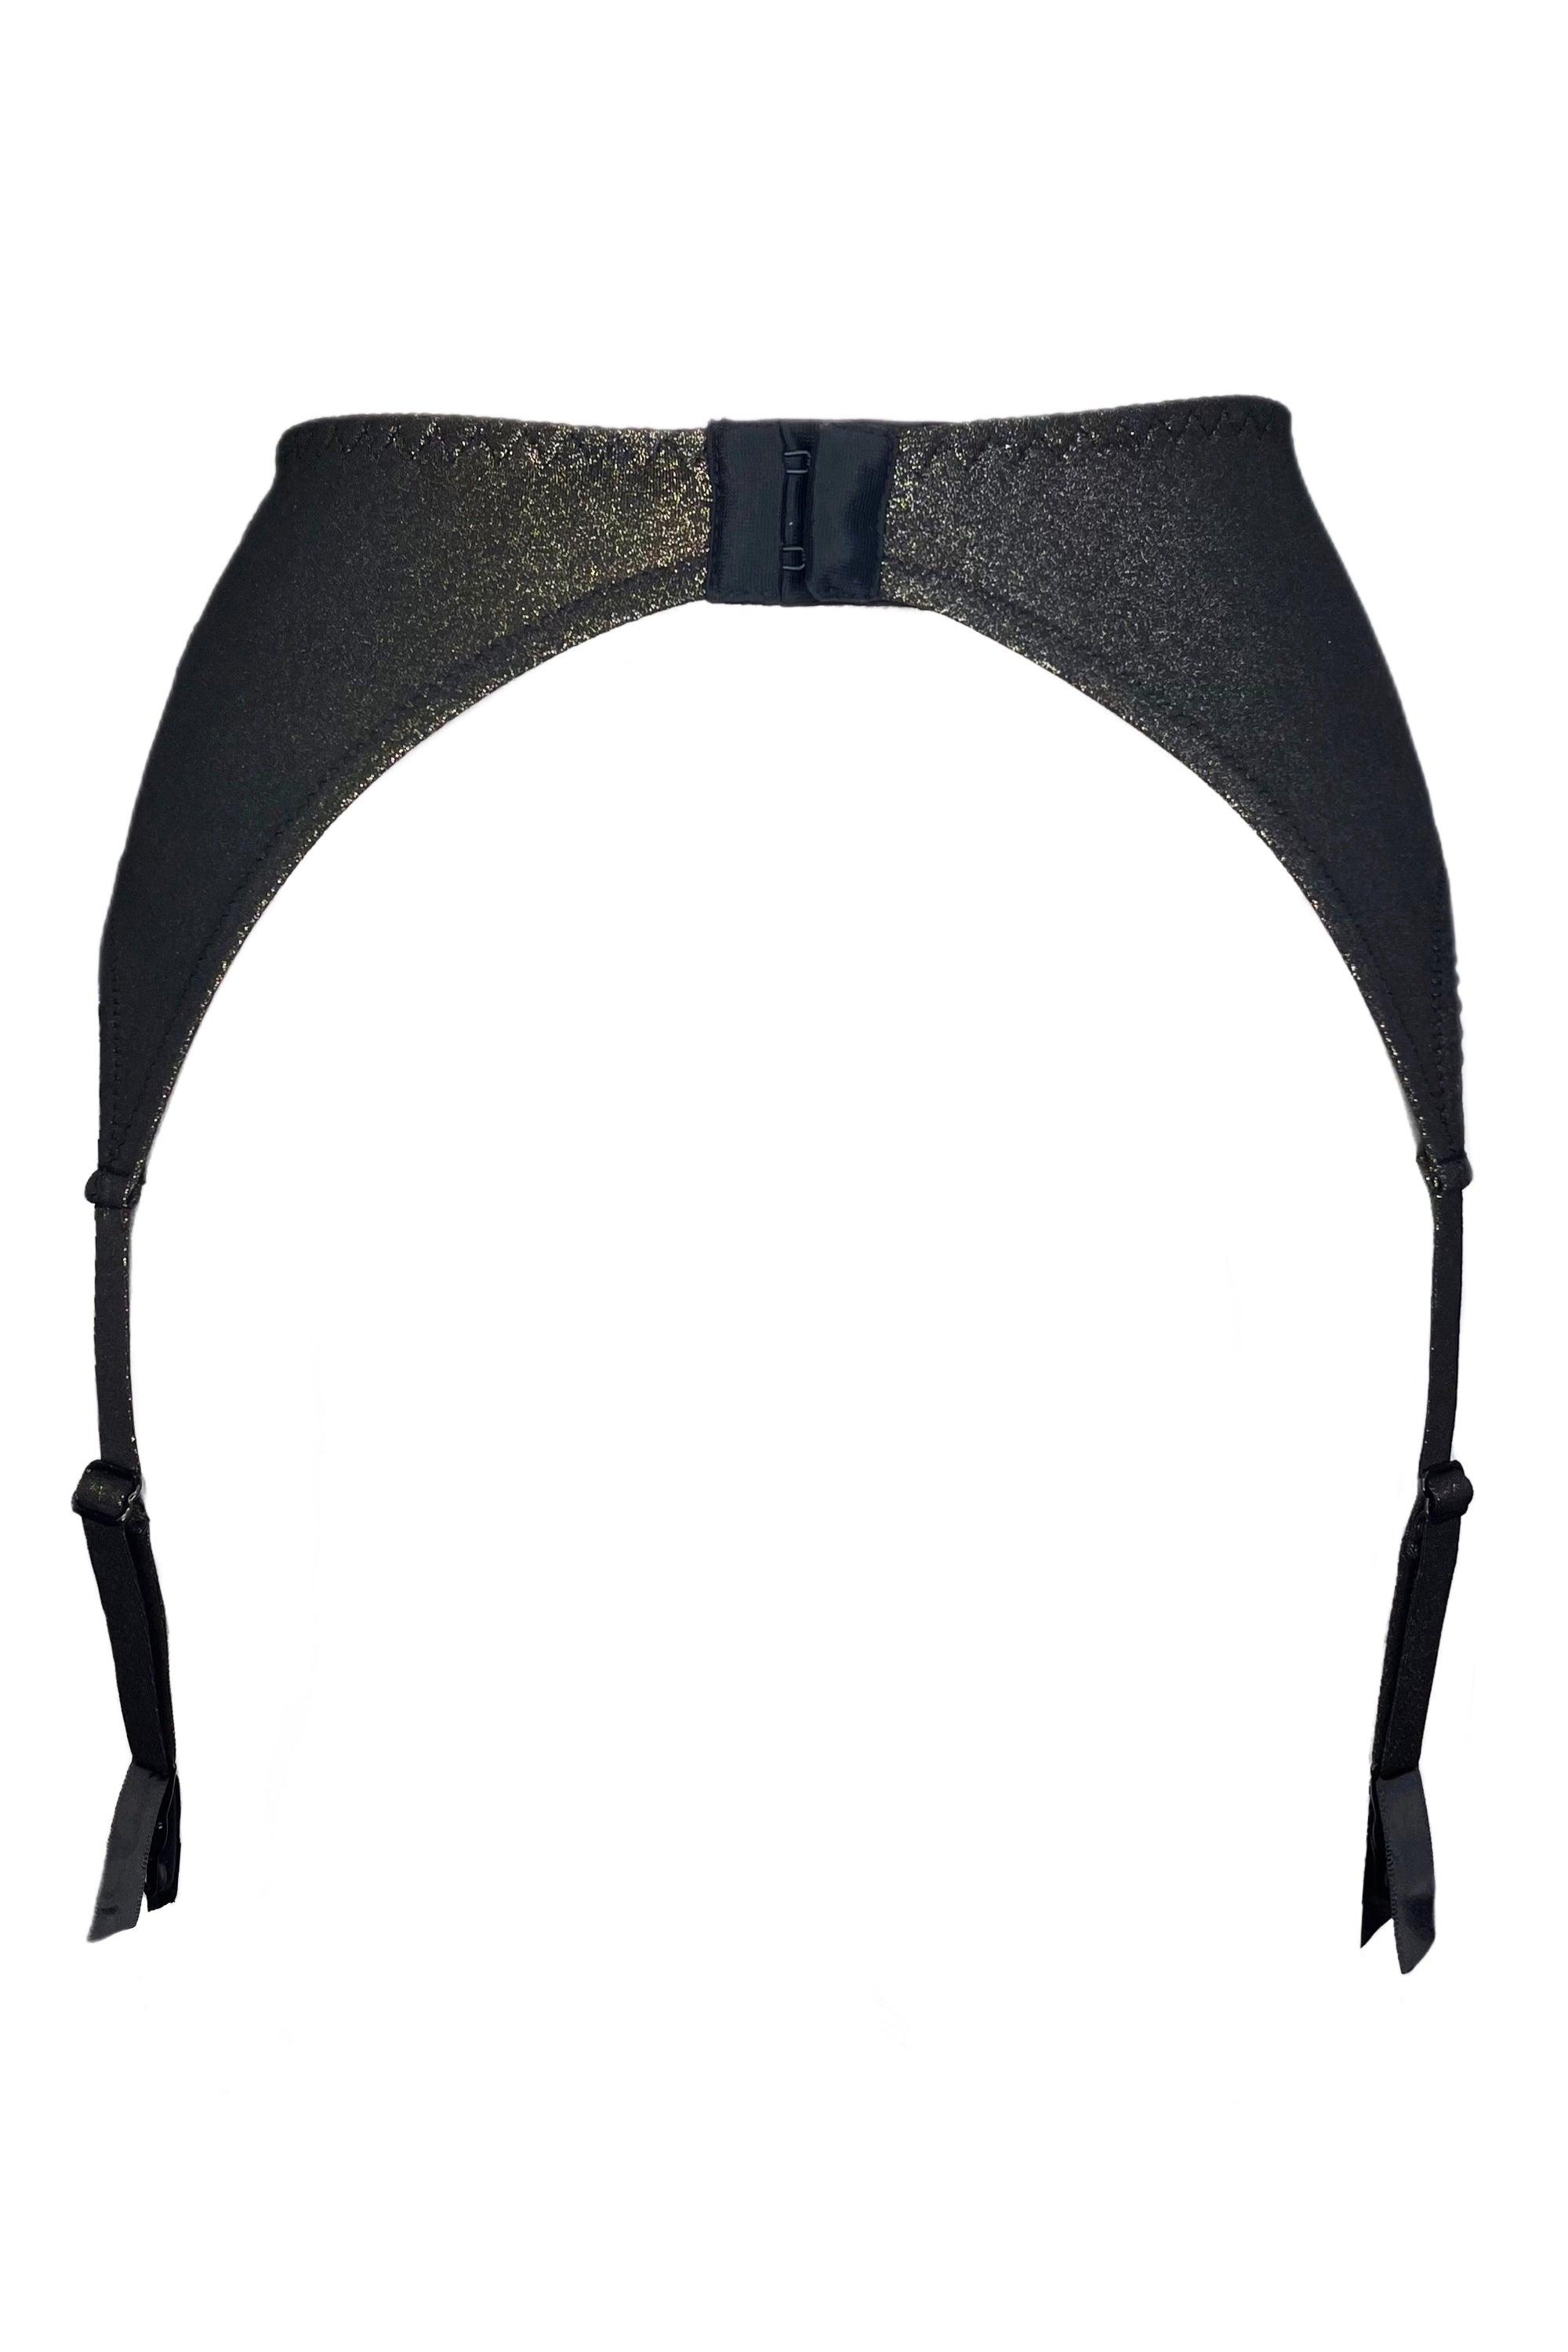 Ramonda black gold garter belt